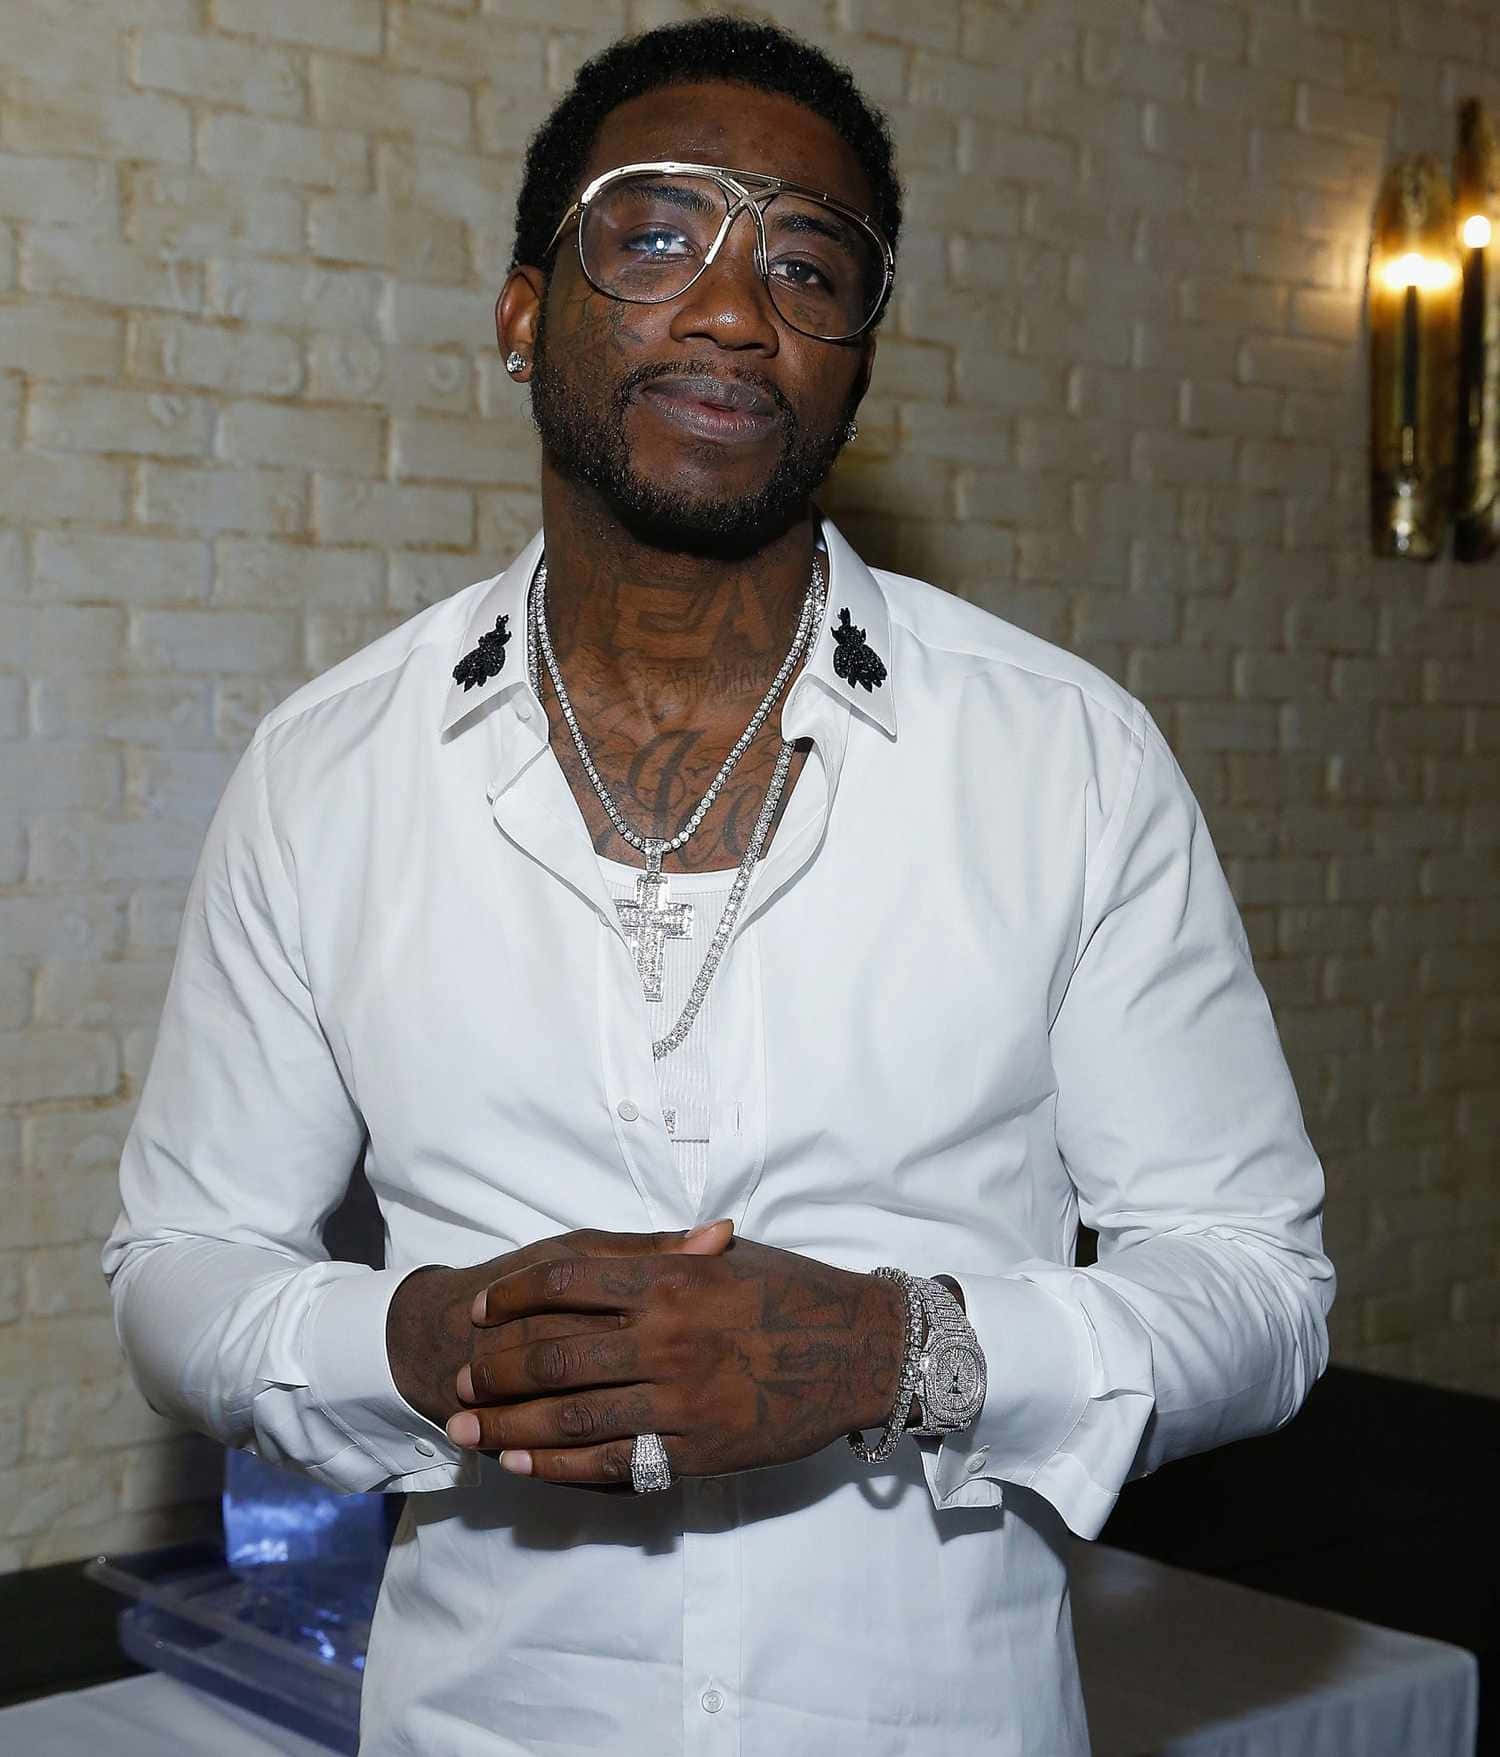 Gucci Mane White Shirt Jewelry Portrait Wallpaper